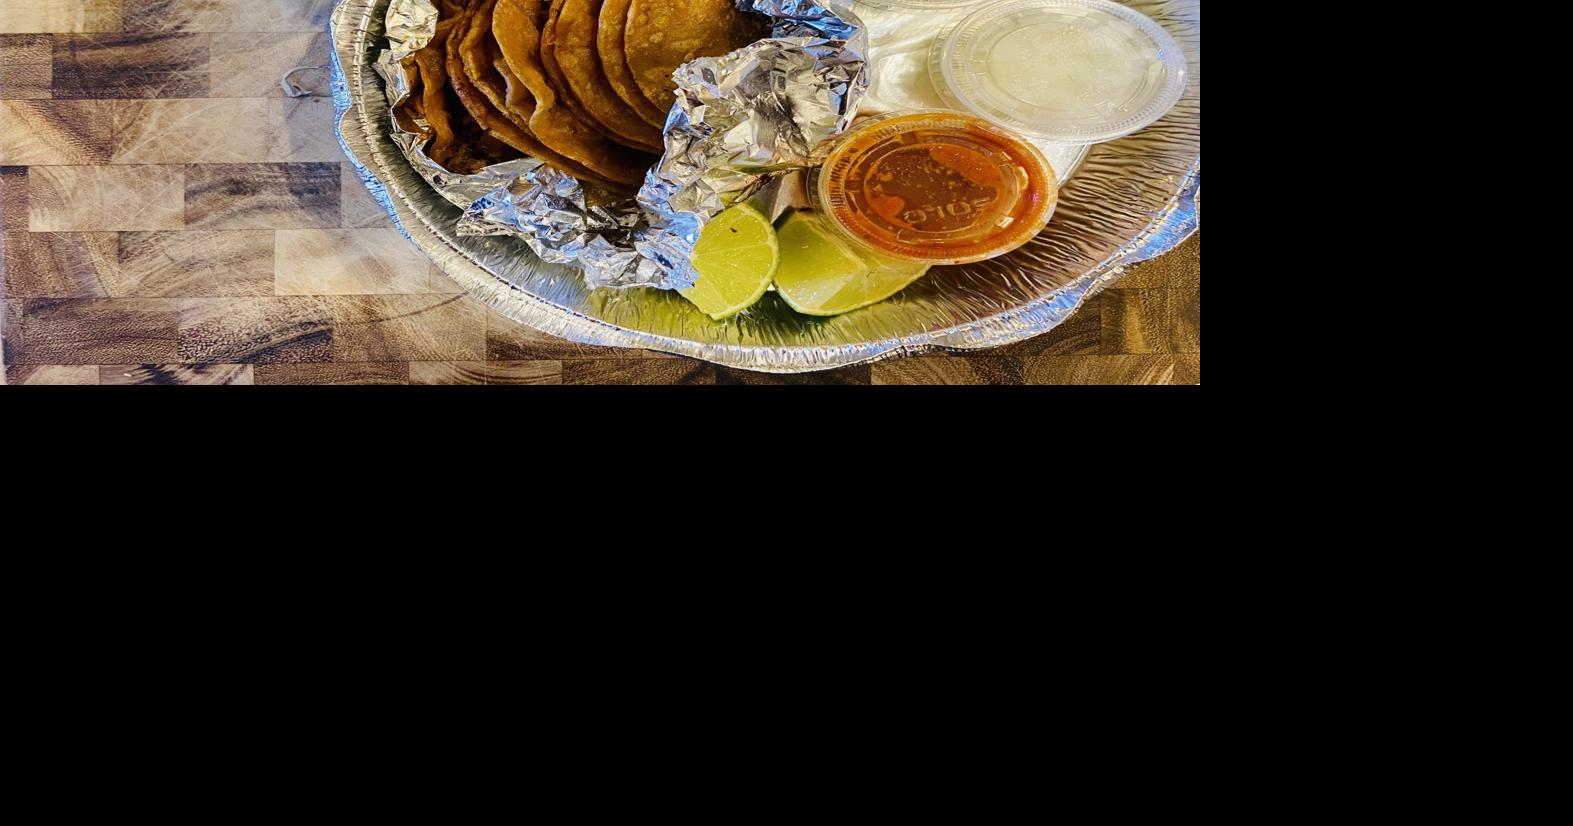 Quesabirria Tacos - Sunday Supper Movement